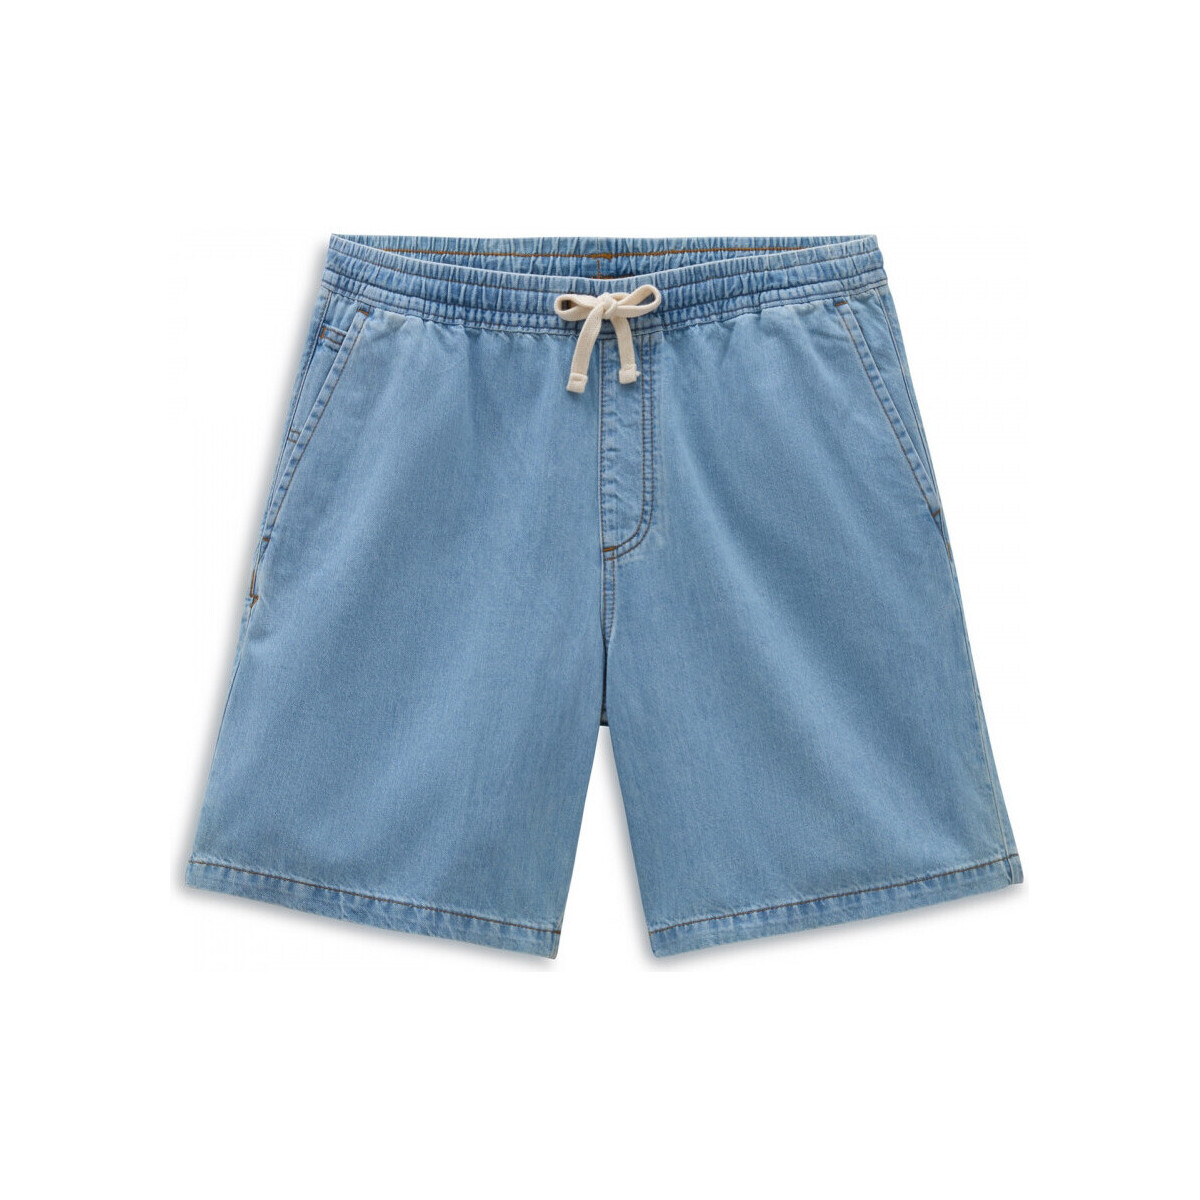 textil Hombre Shorts / Bermudas Vans Range denim relaxedhort Azul